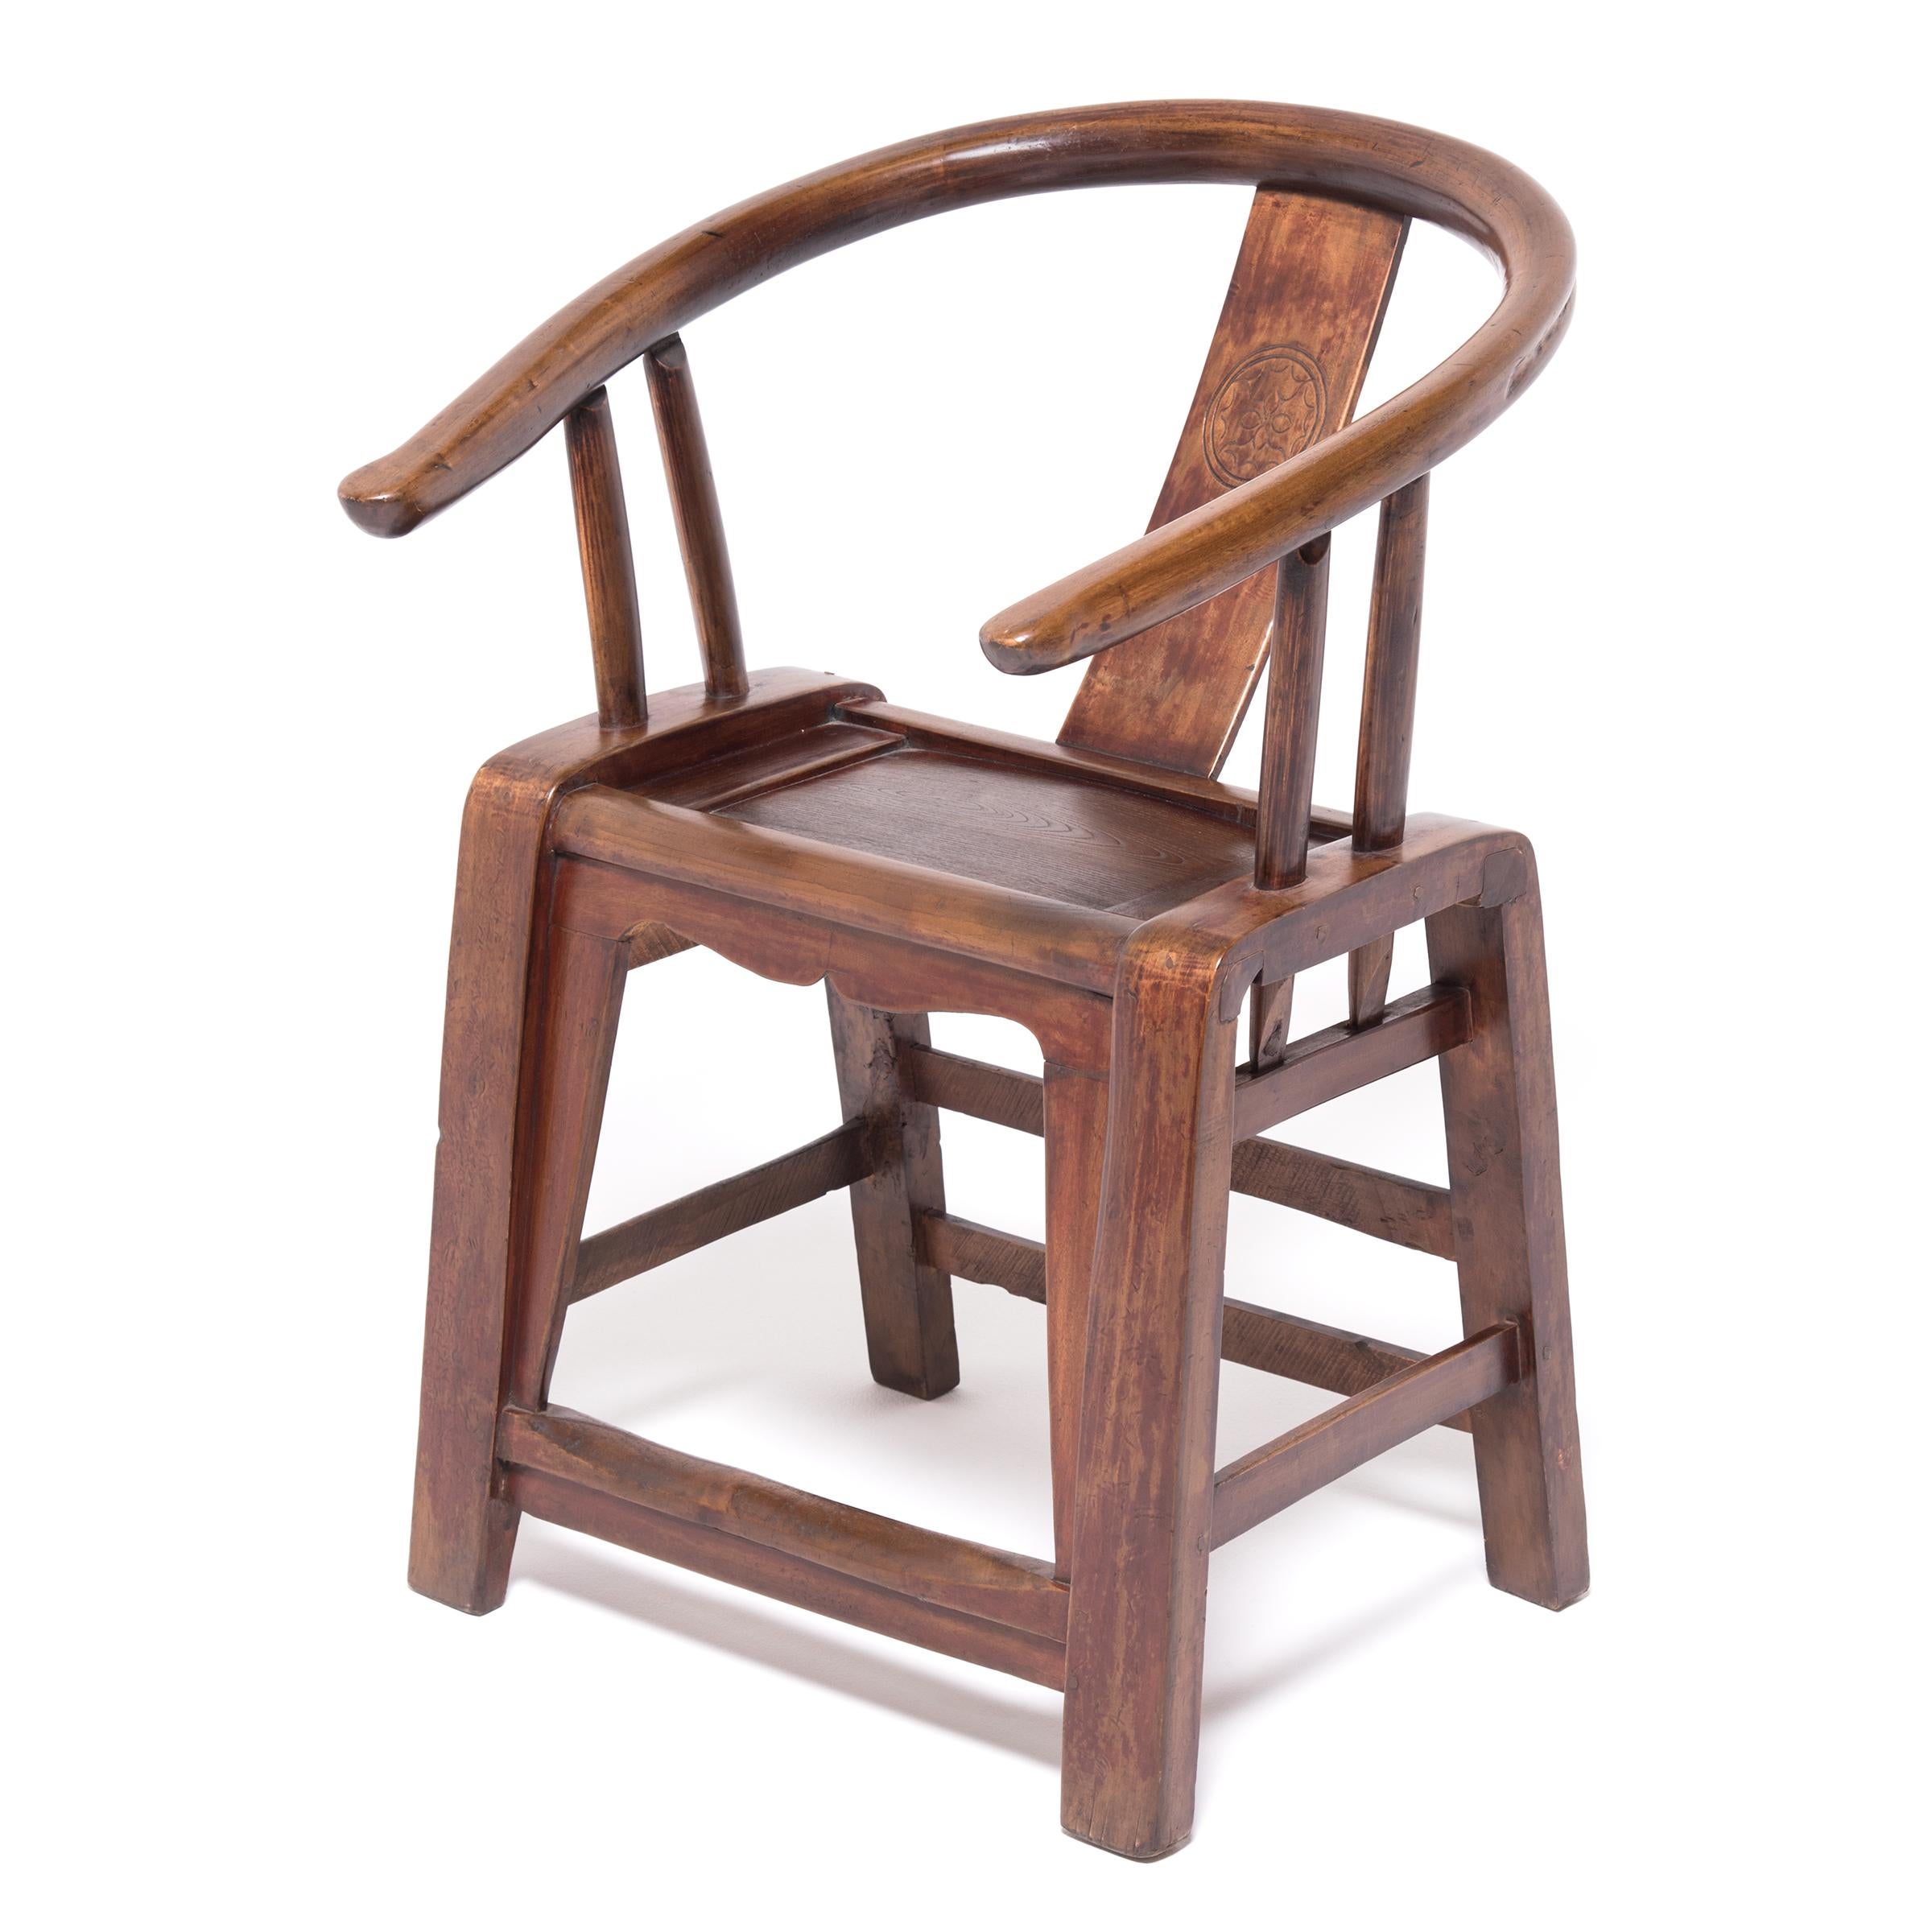 Qing Chinese Roundback Chair, circa 1850